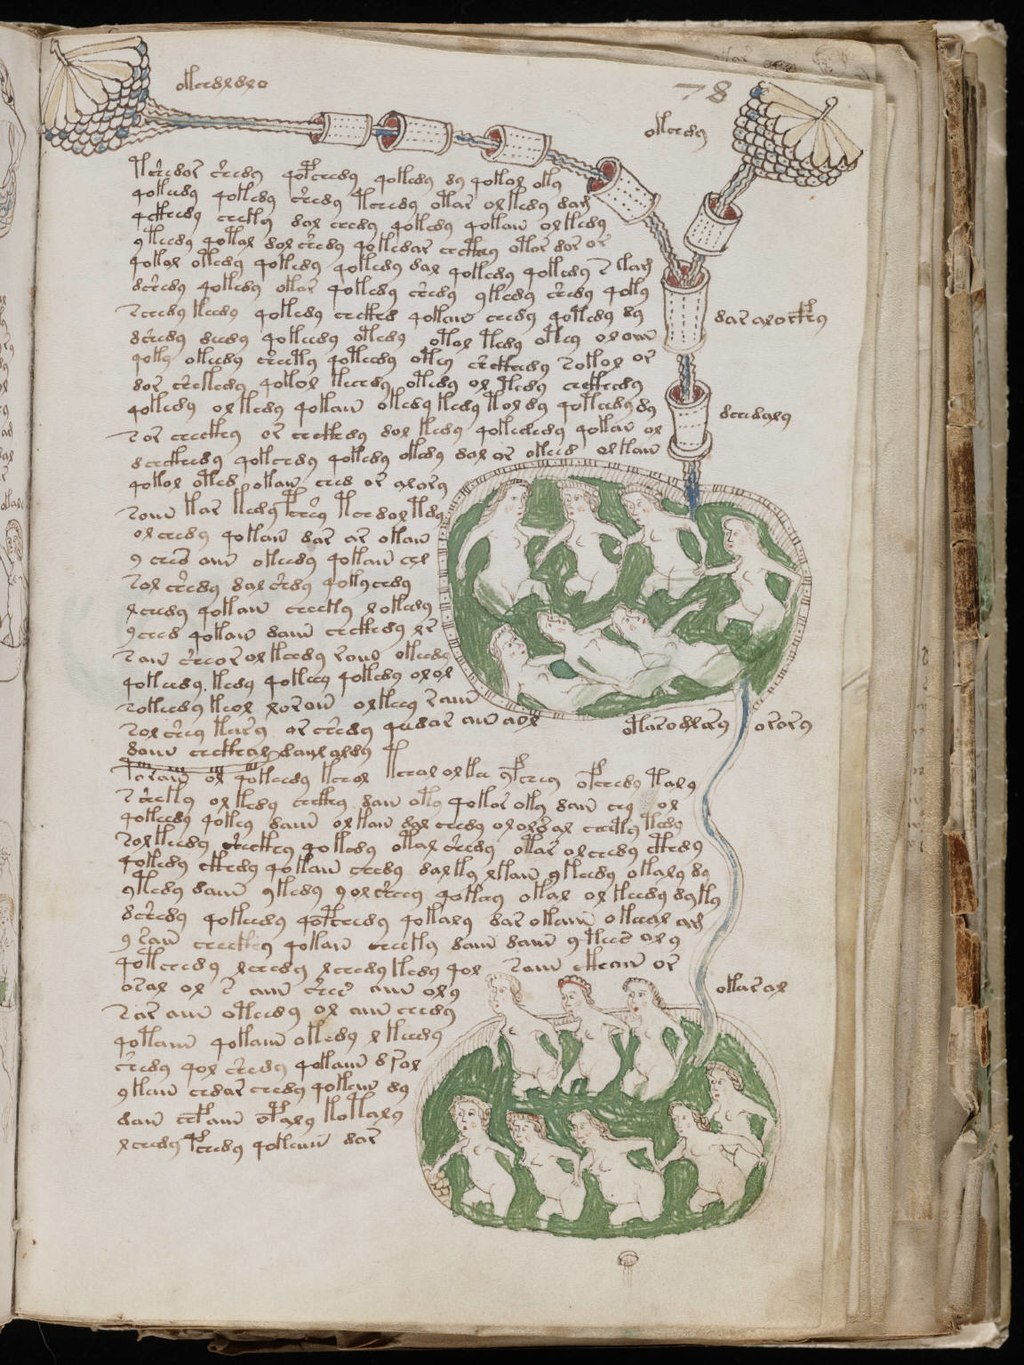 voynich manuscript yale